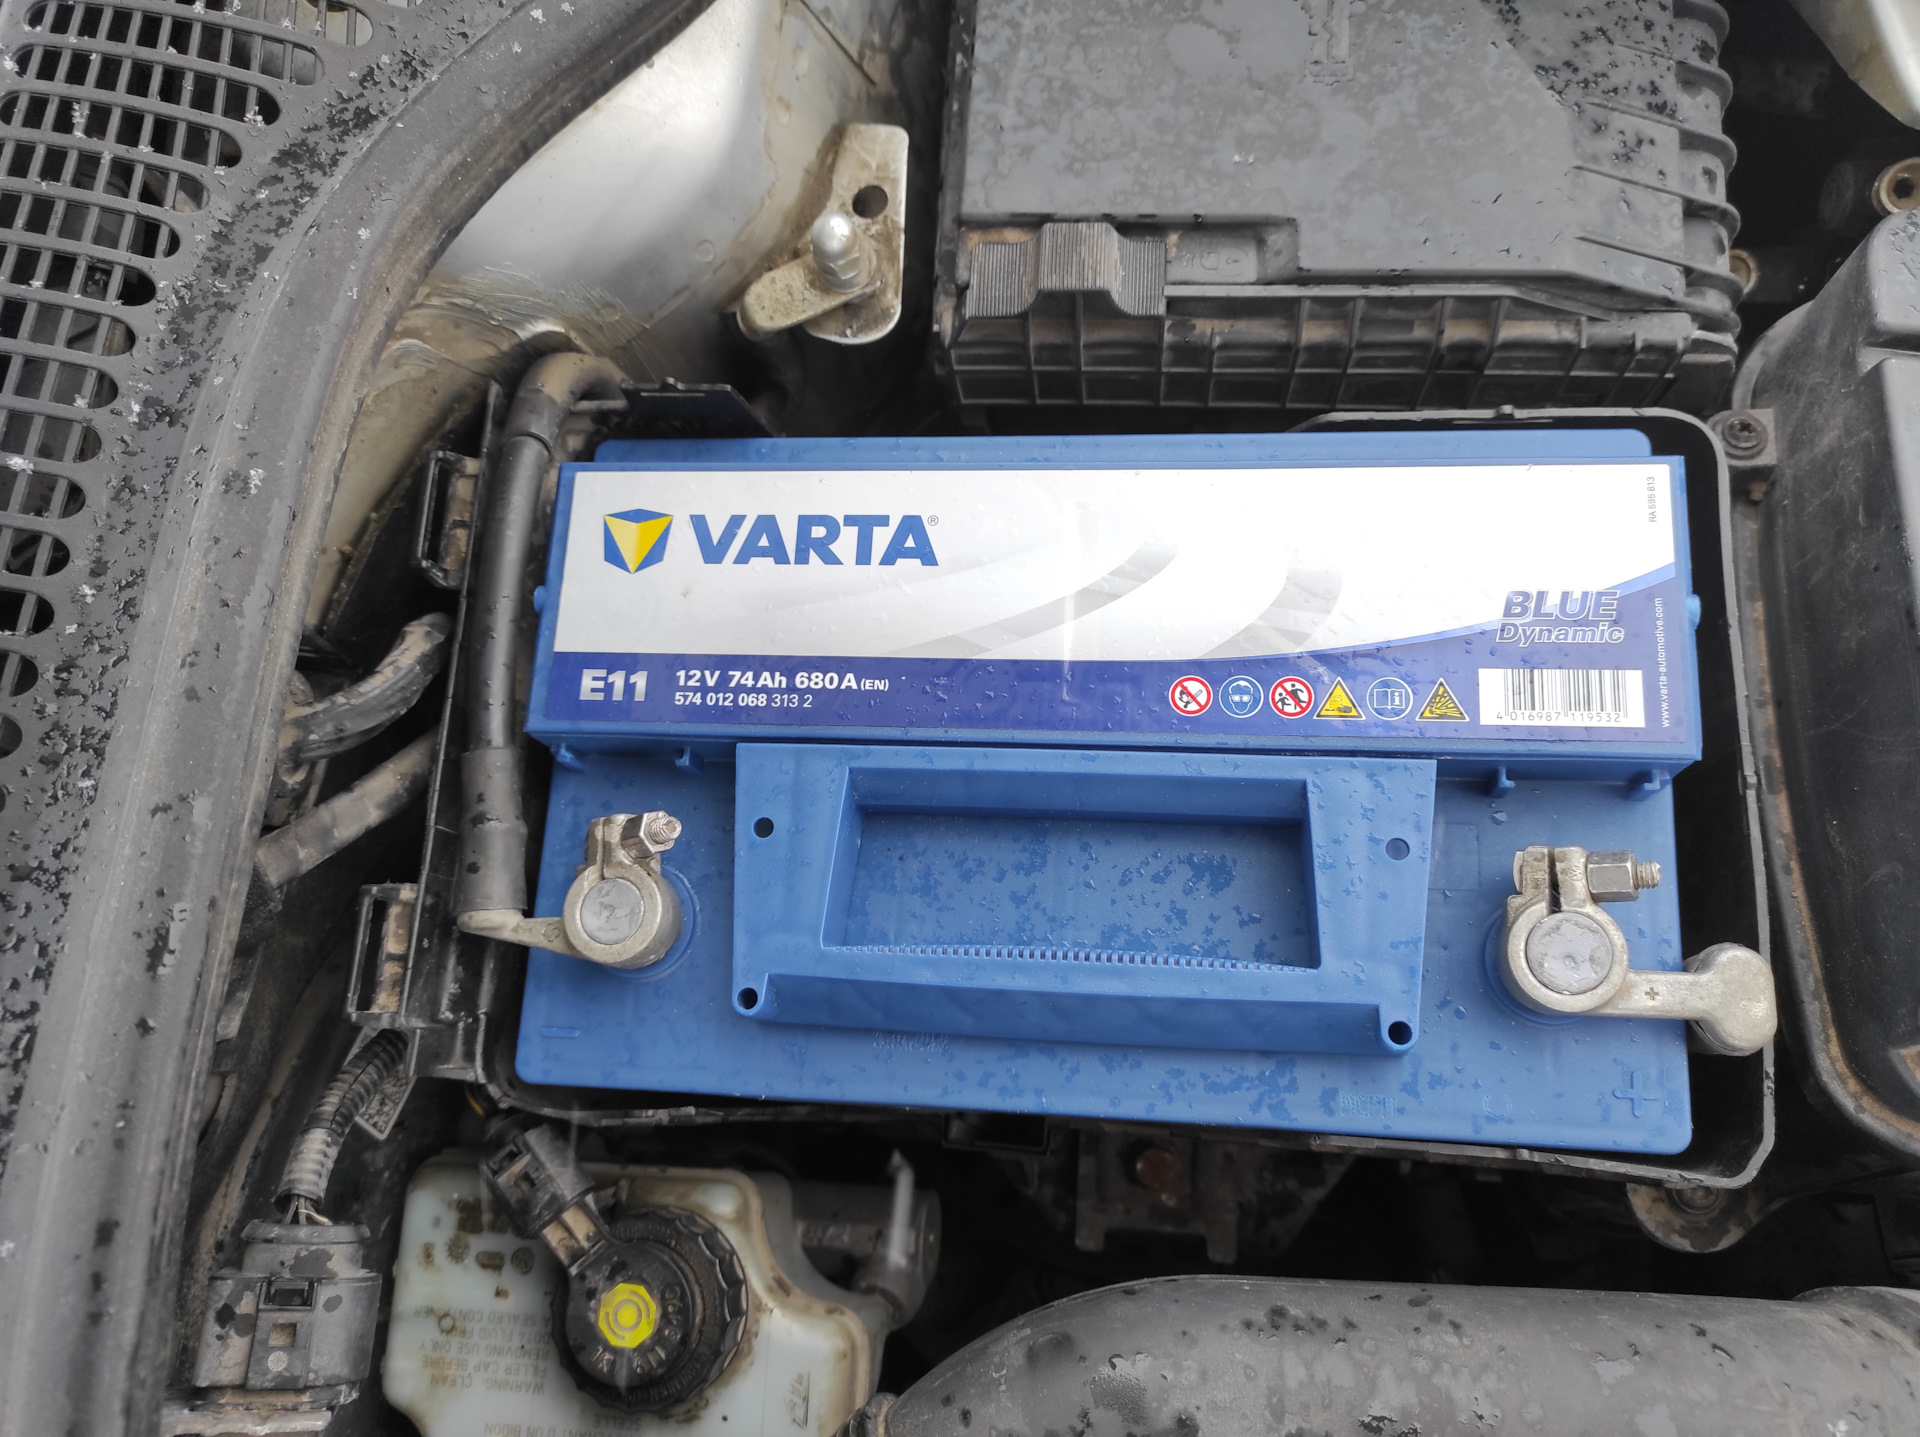 Аккумулятор на 13 про оригинал. Varta Blue Dynamic e11 74r. Родной АКБ Фиат. Mf54080 Aurora аккумулятор газоотвод. У кого аккумулятор под крылом.